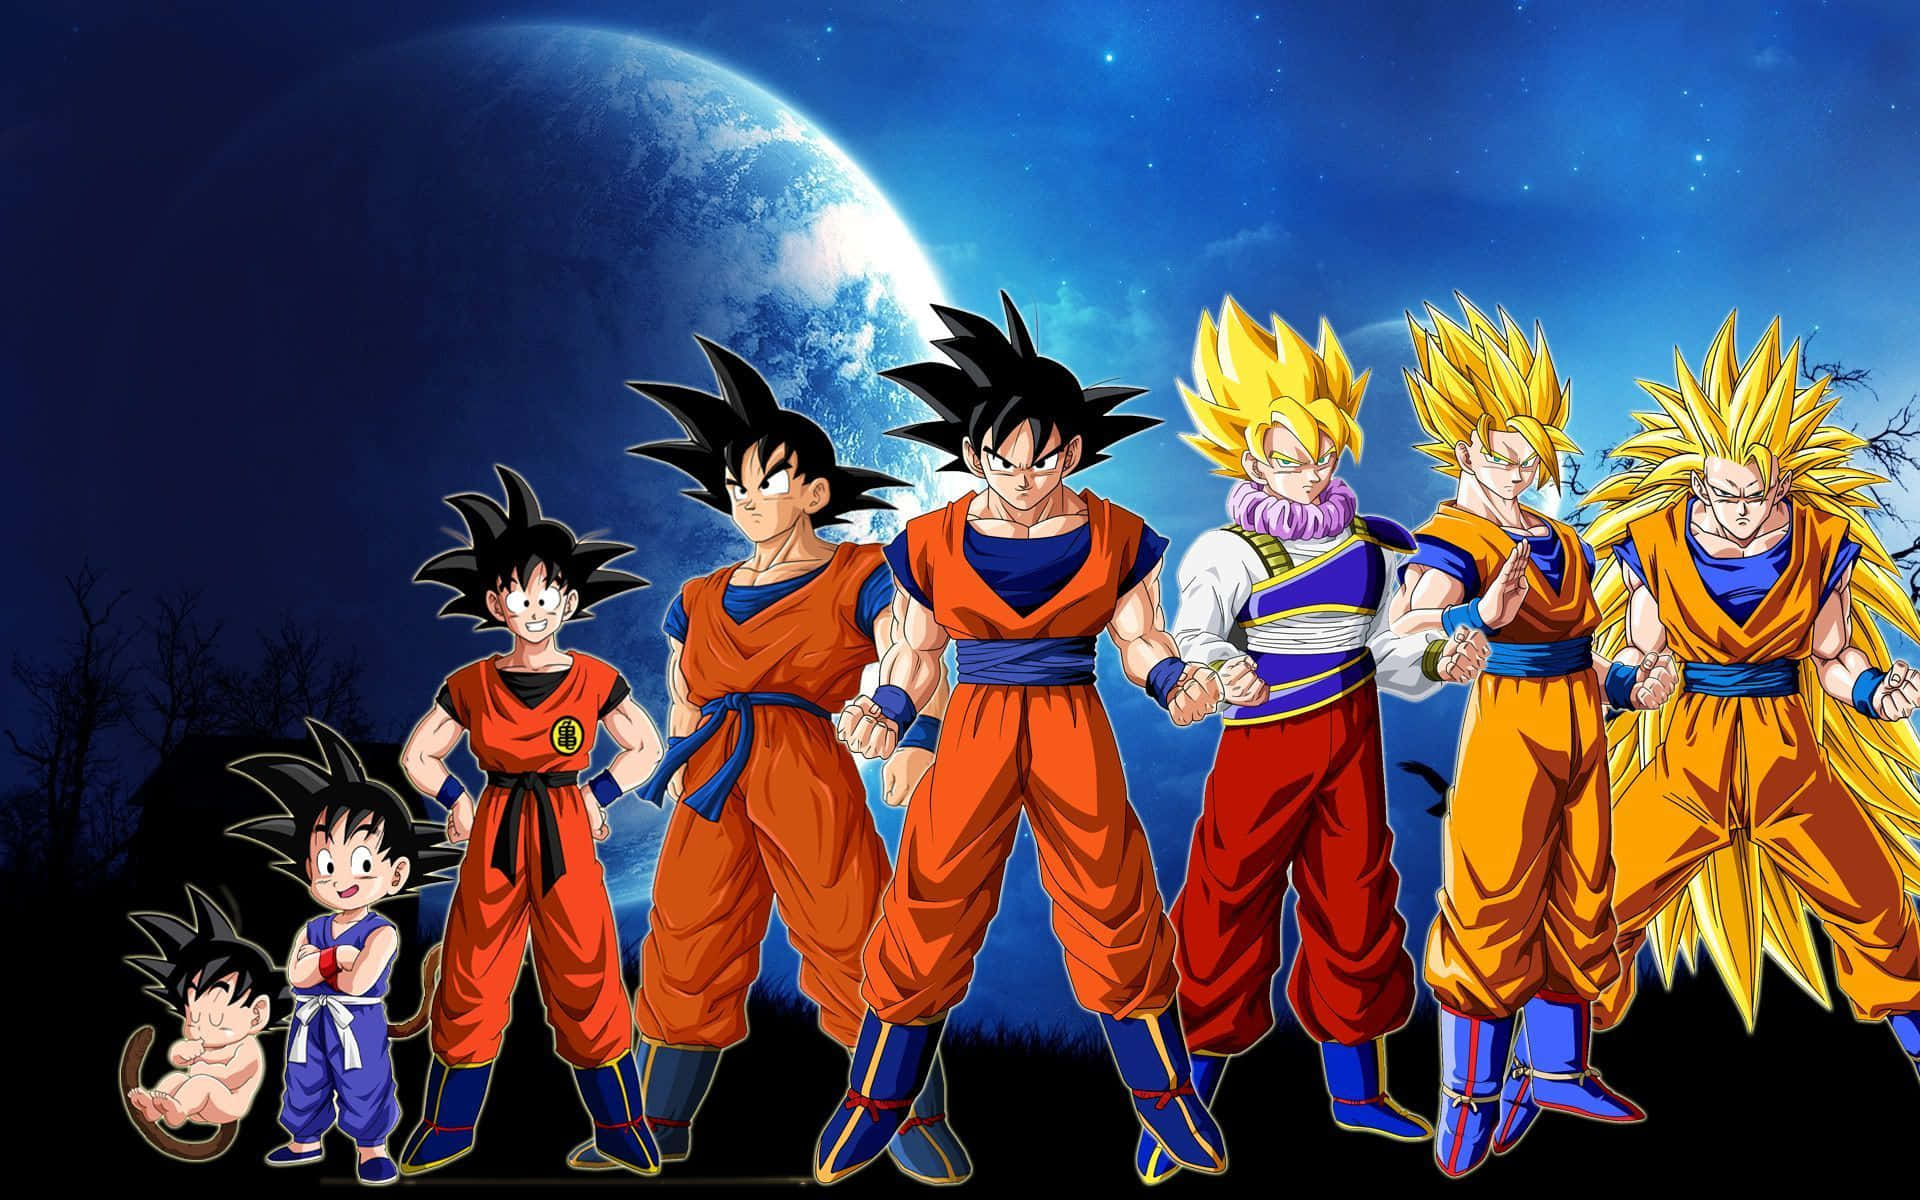 Imagemdo Goku Super Saiyan Evolution.